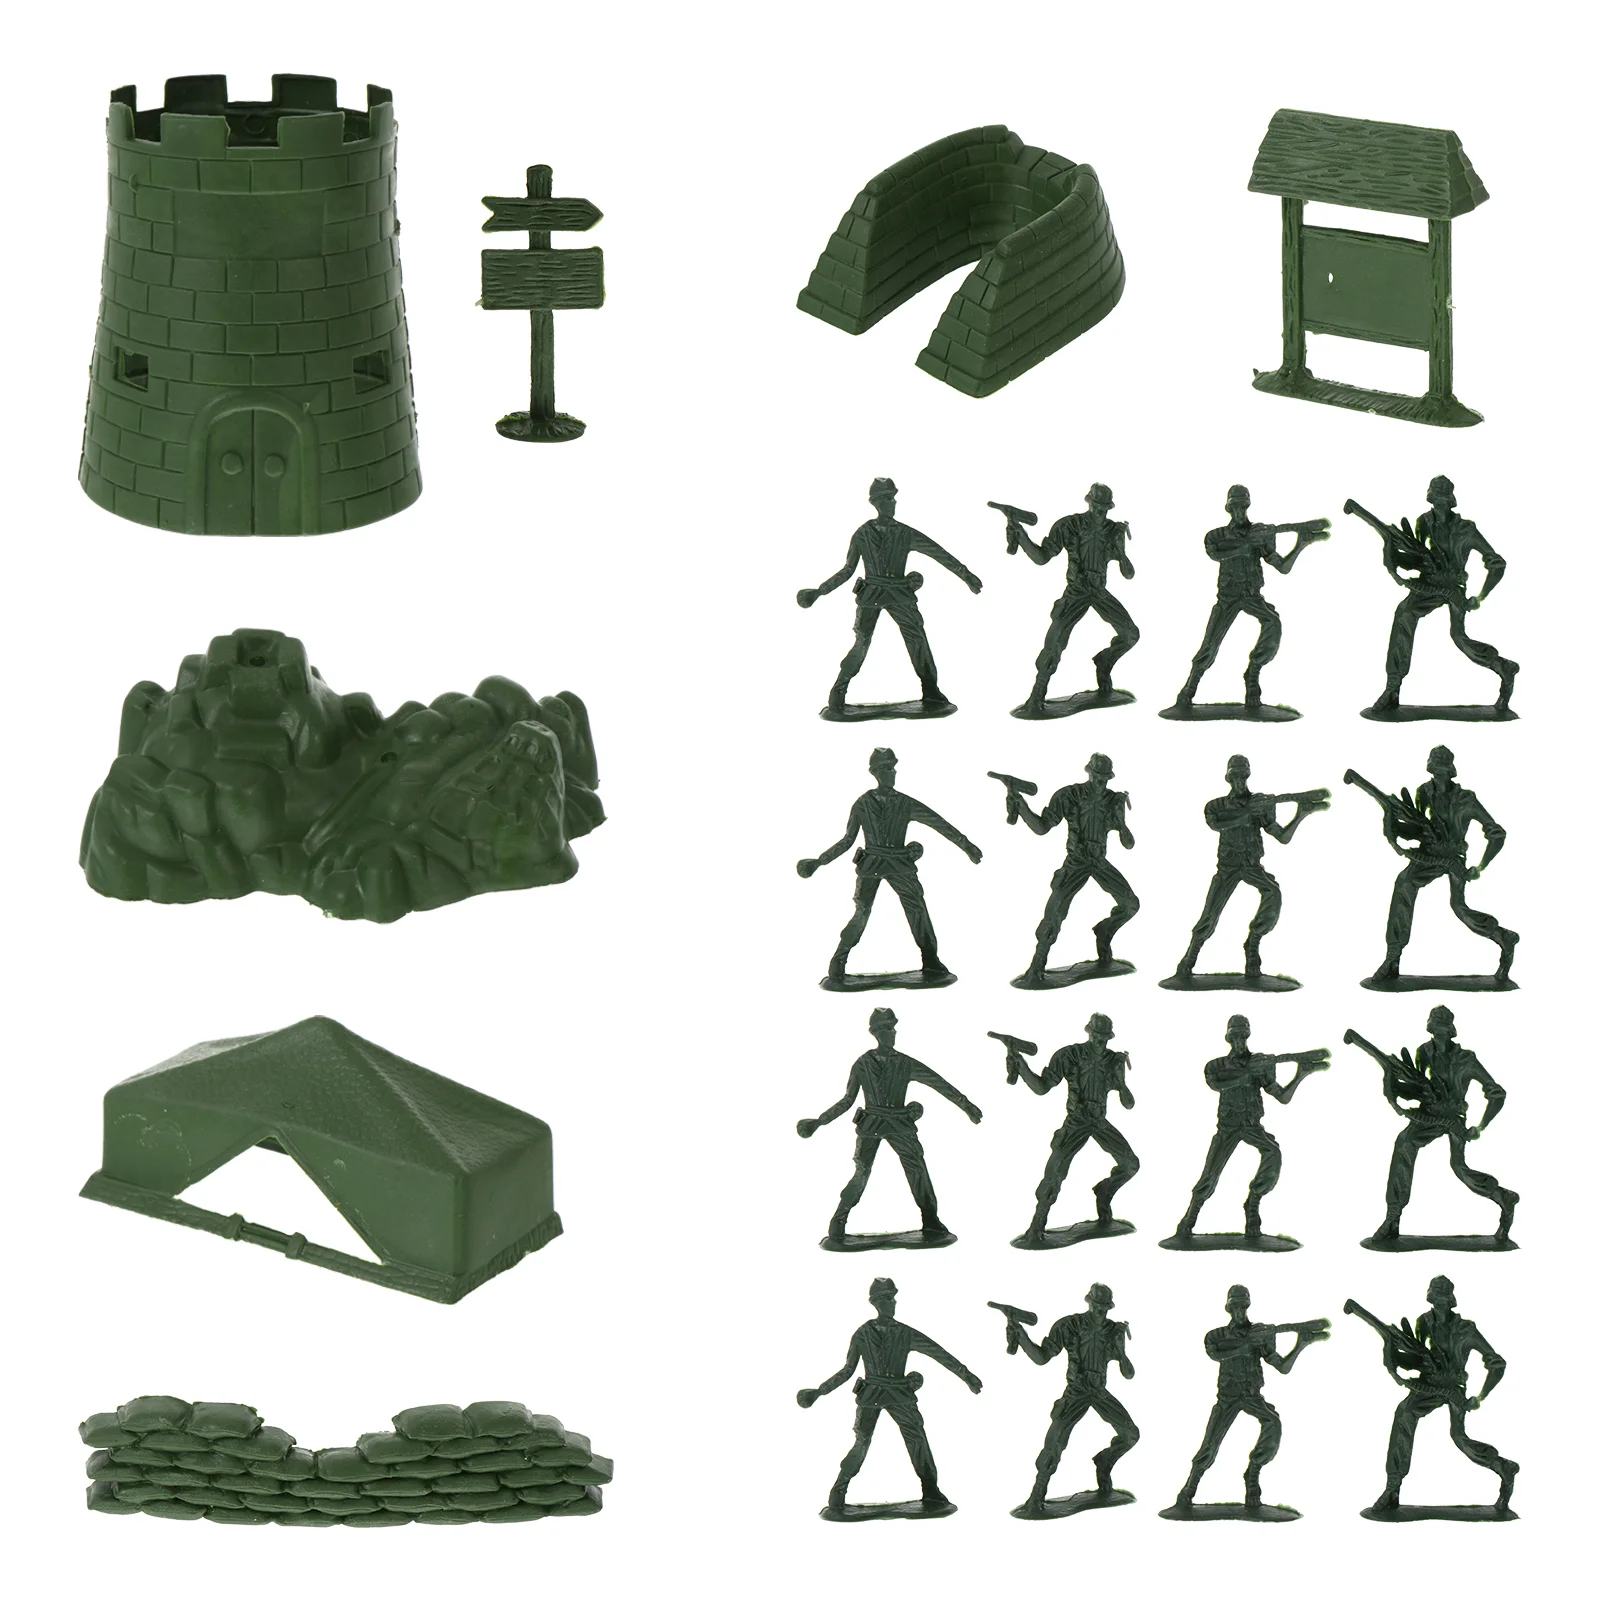 

Soldier Soldiers Action Figure Figures Toy People Mini Toys Figurines Plastic Playsets Men Playset Model Battlefield Career